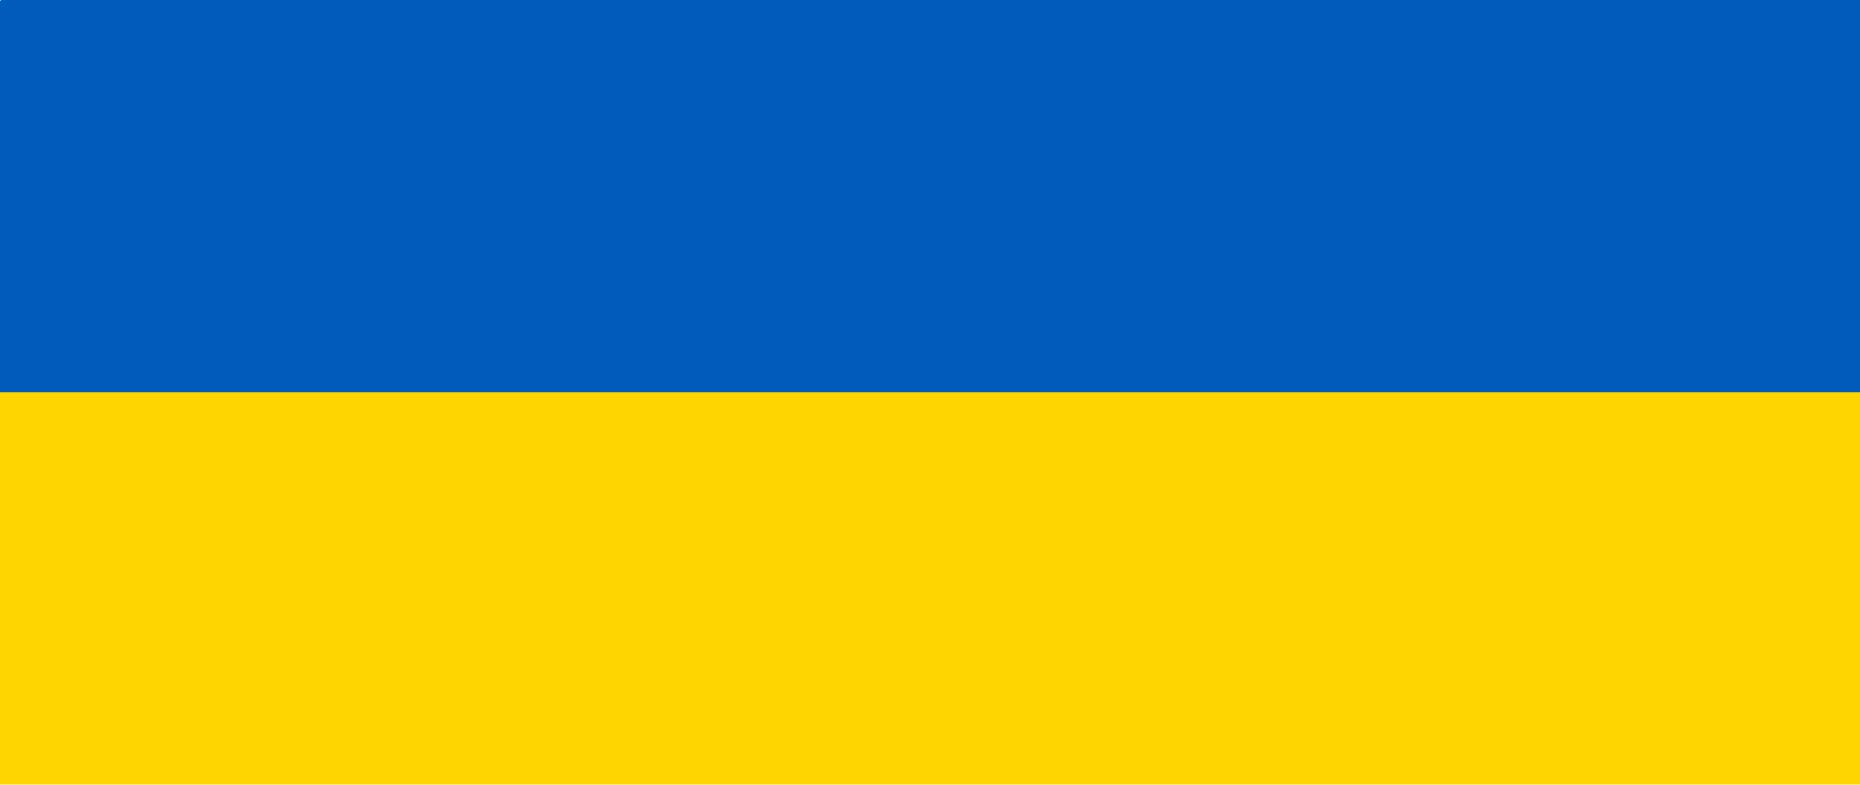 Una bandera de Ucrania